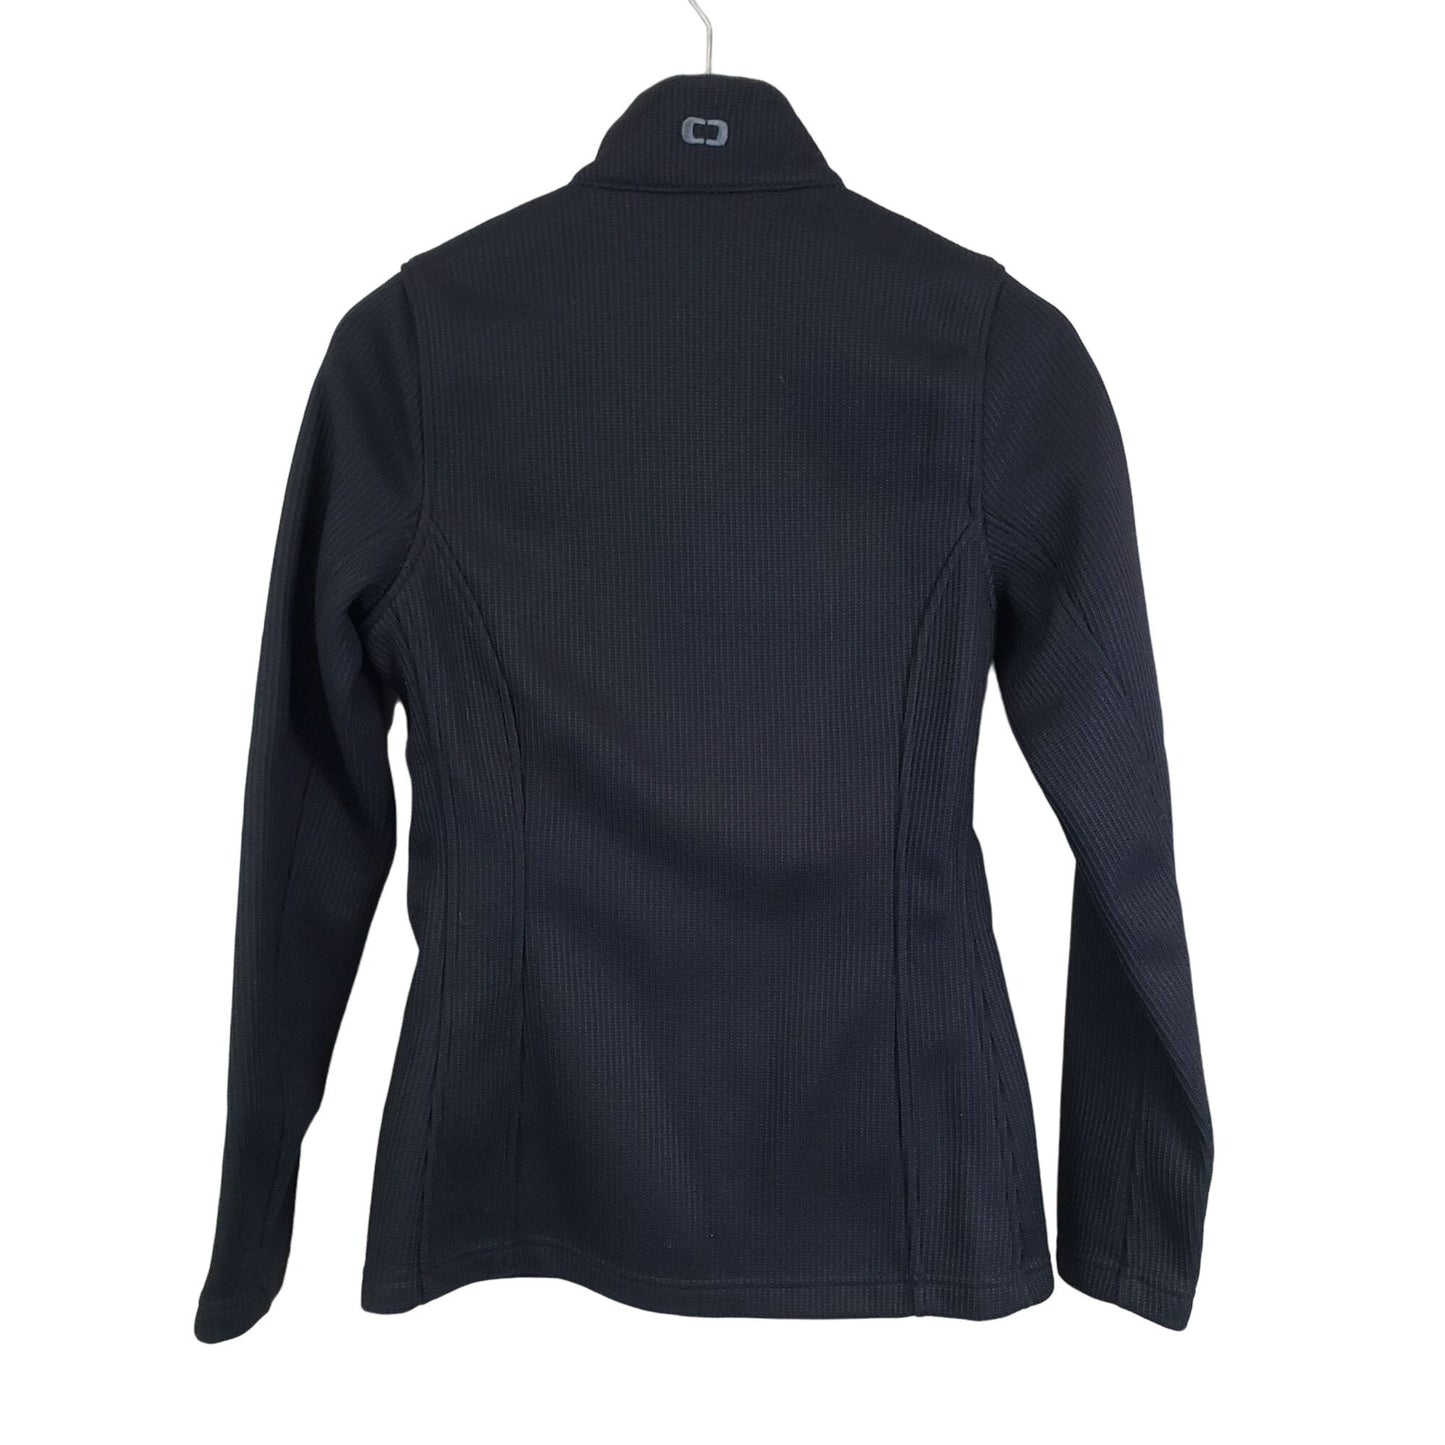 OGIO Textured Full Zip Activewear Jacket Size XS